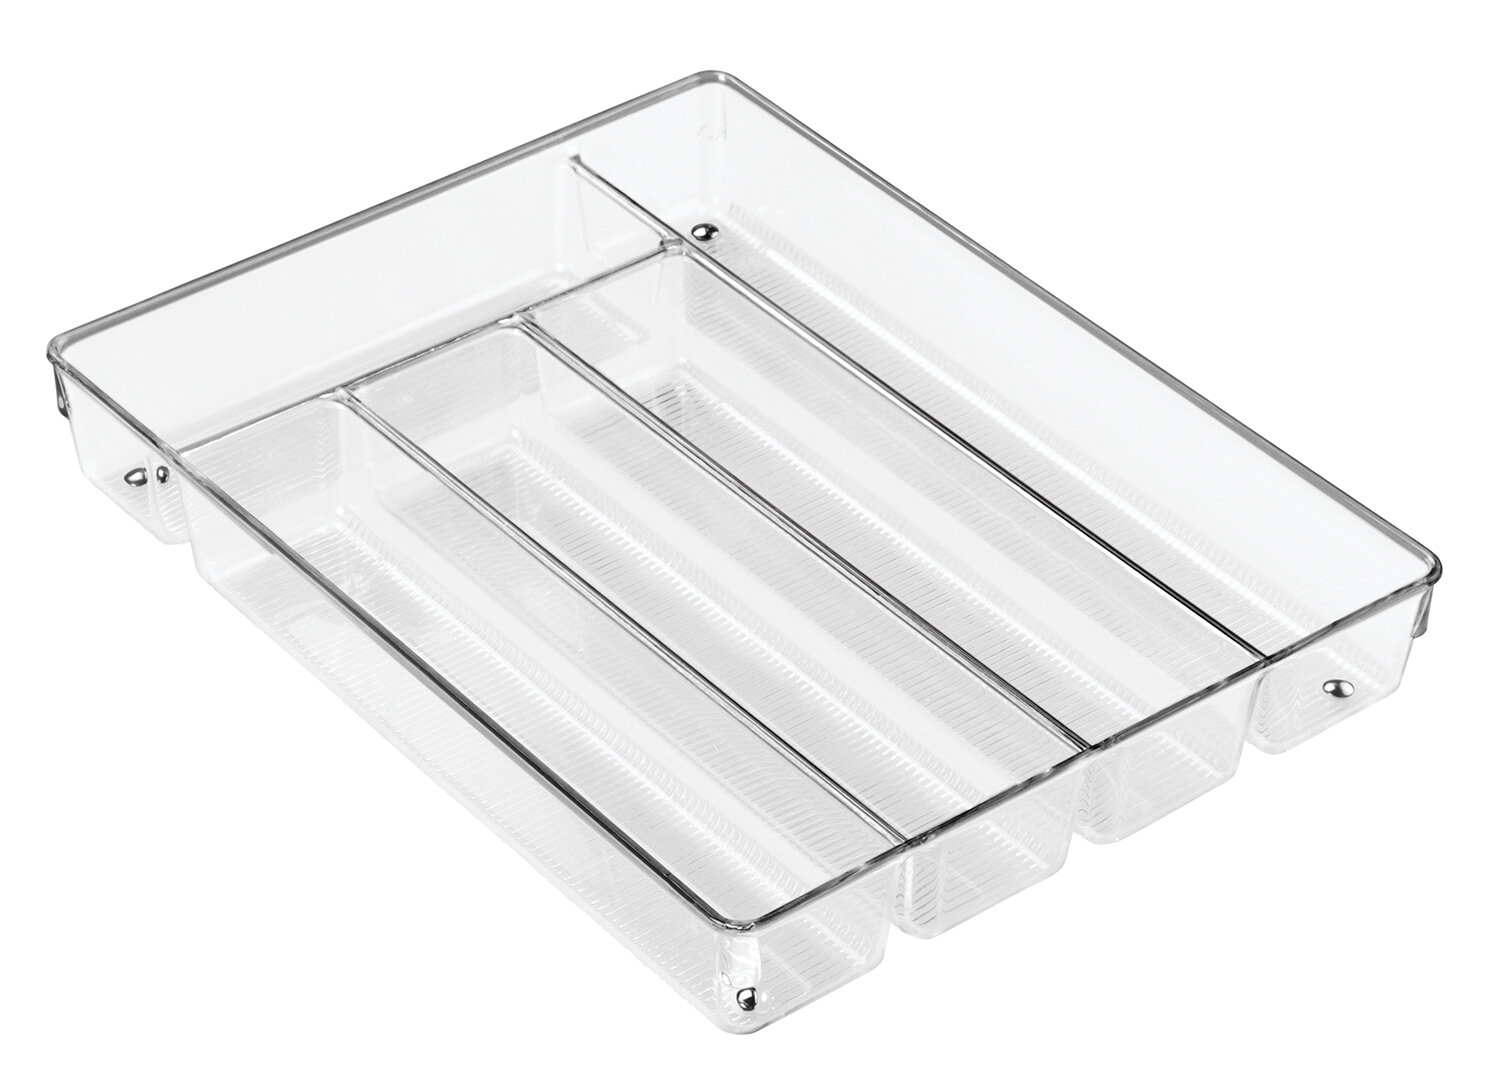 VARIERA Drawer mat, clear, 59 - IKEA